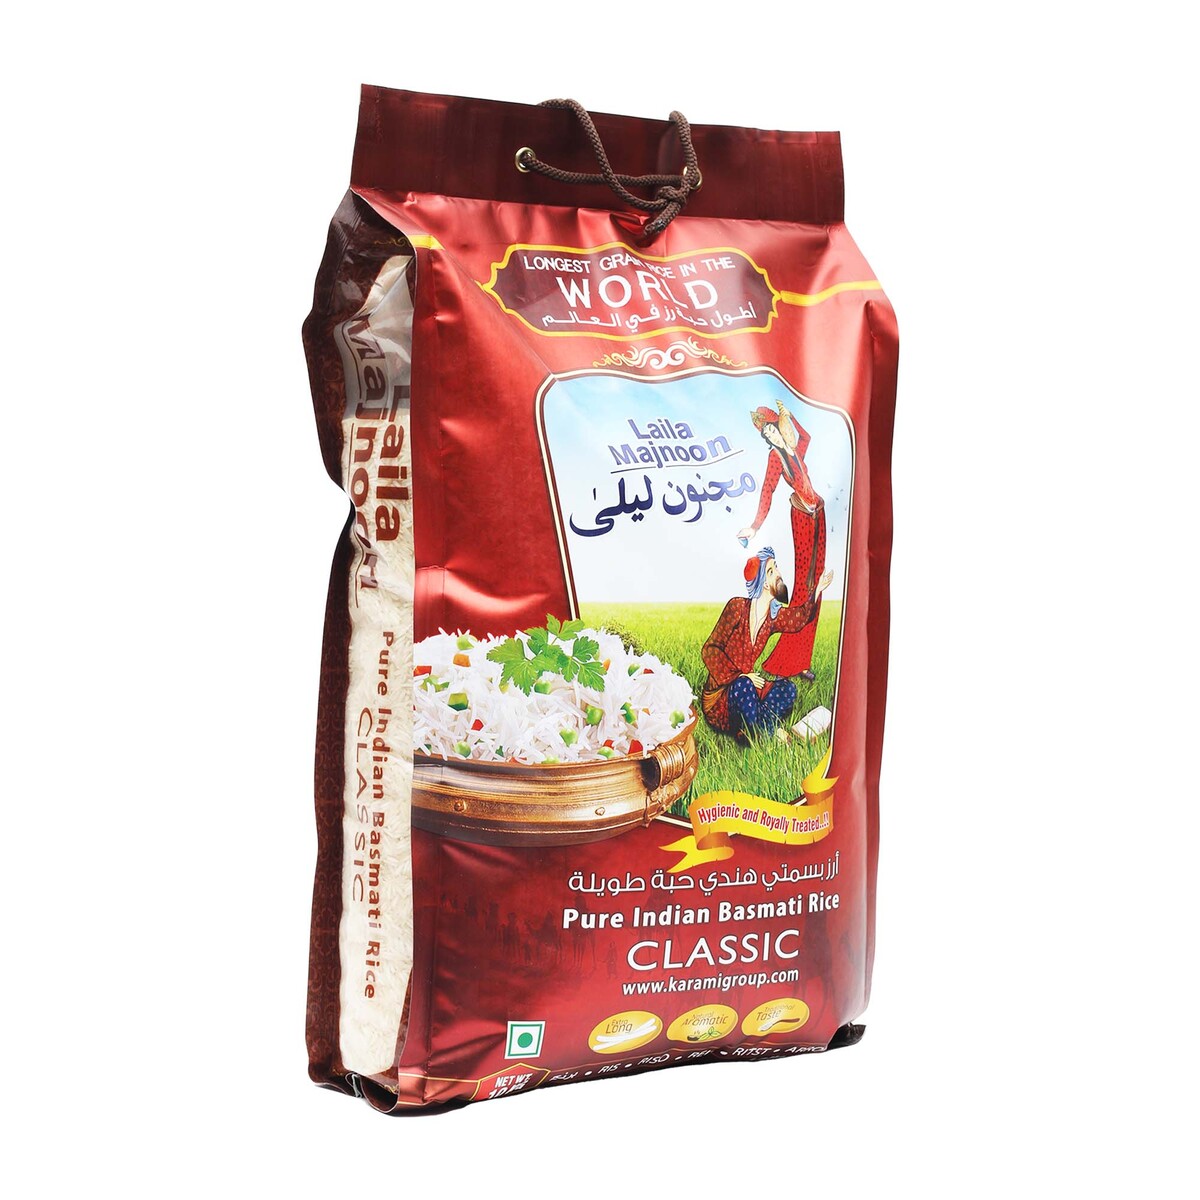 Laila Majnoon Basmati Rice 10kg